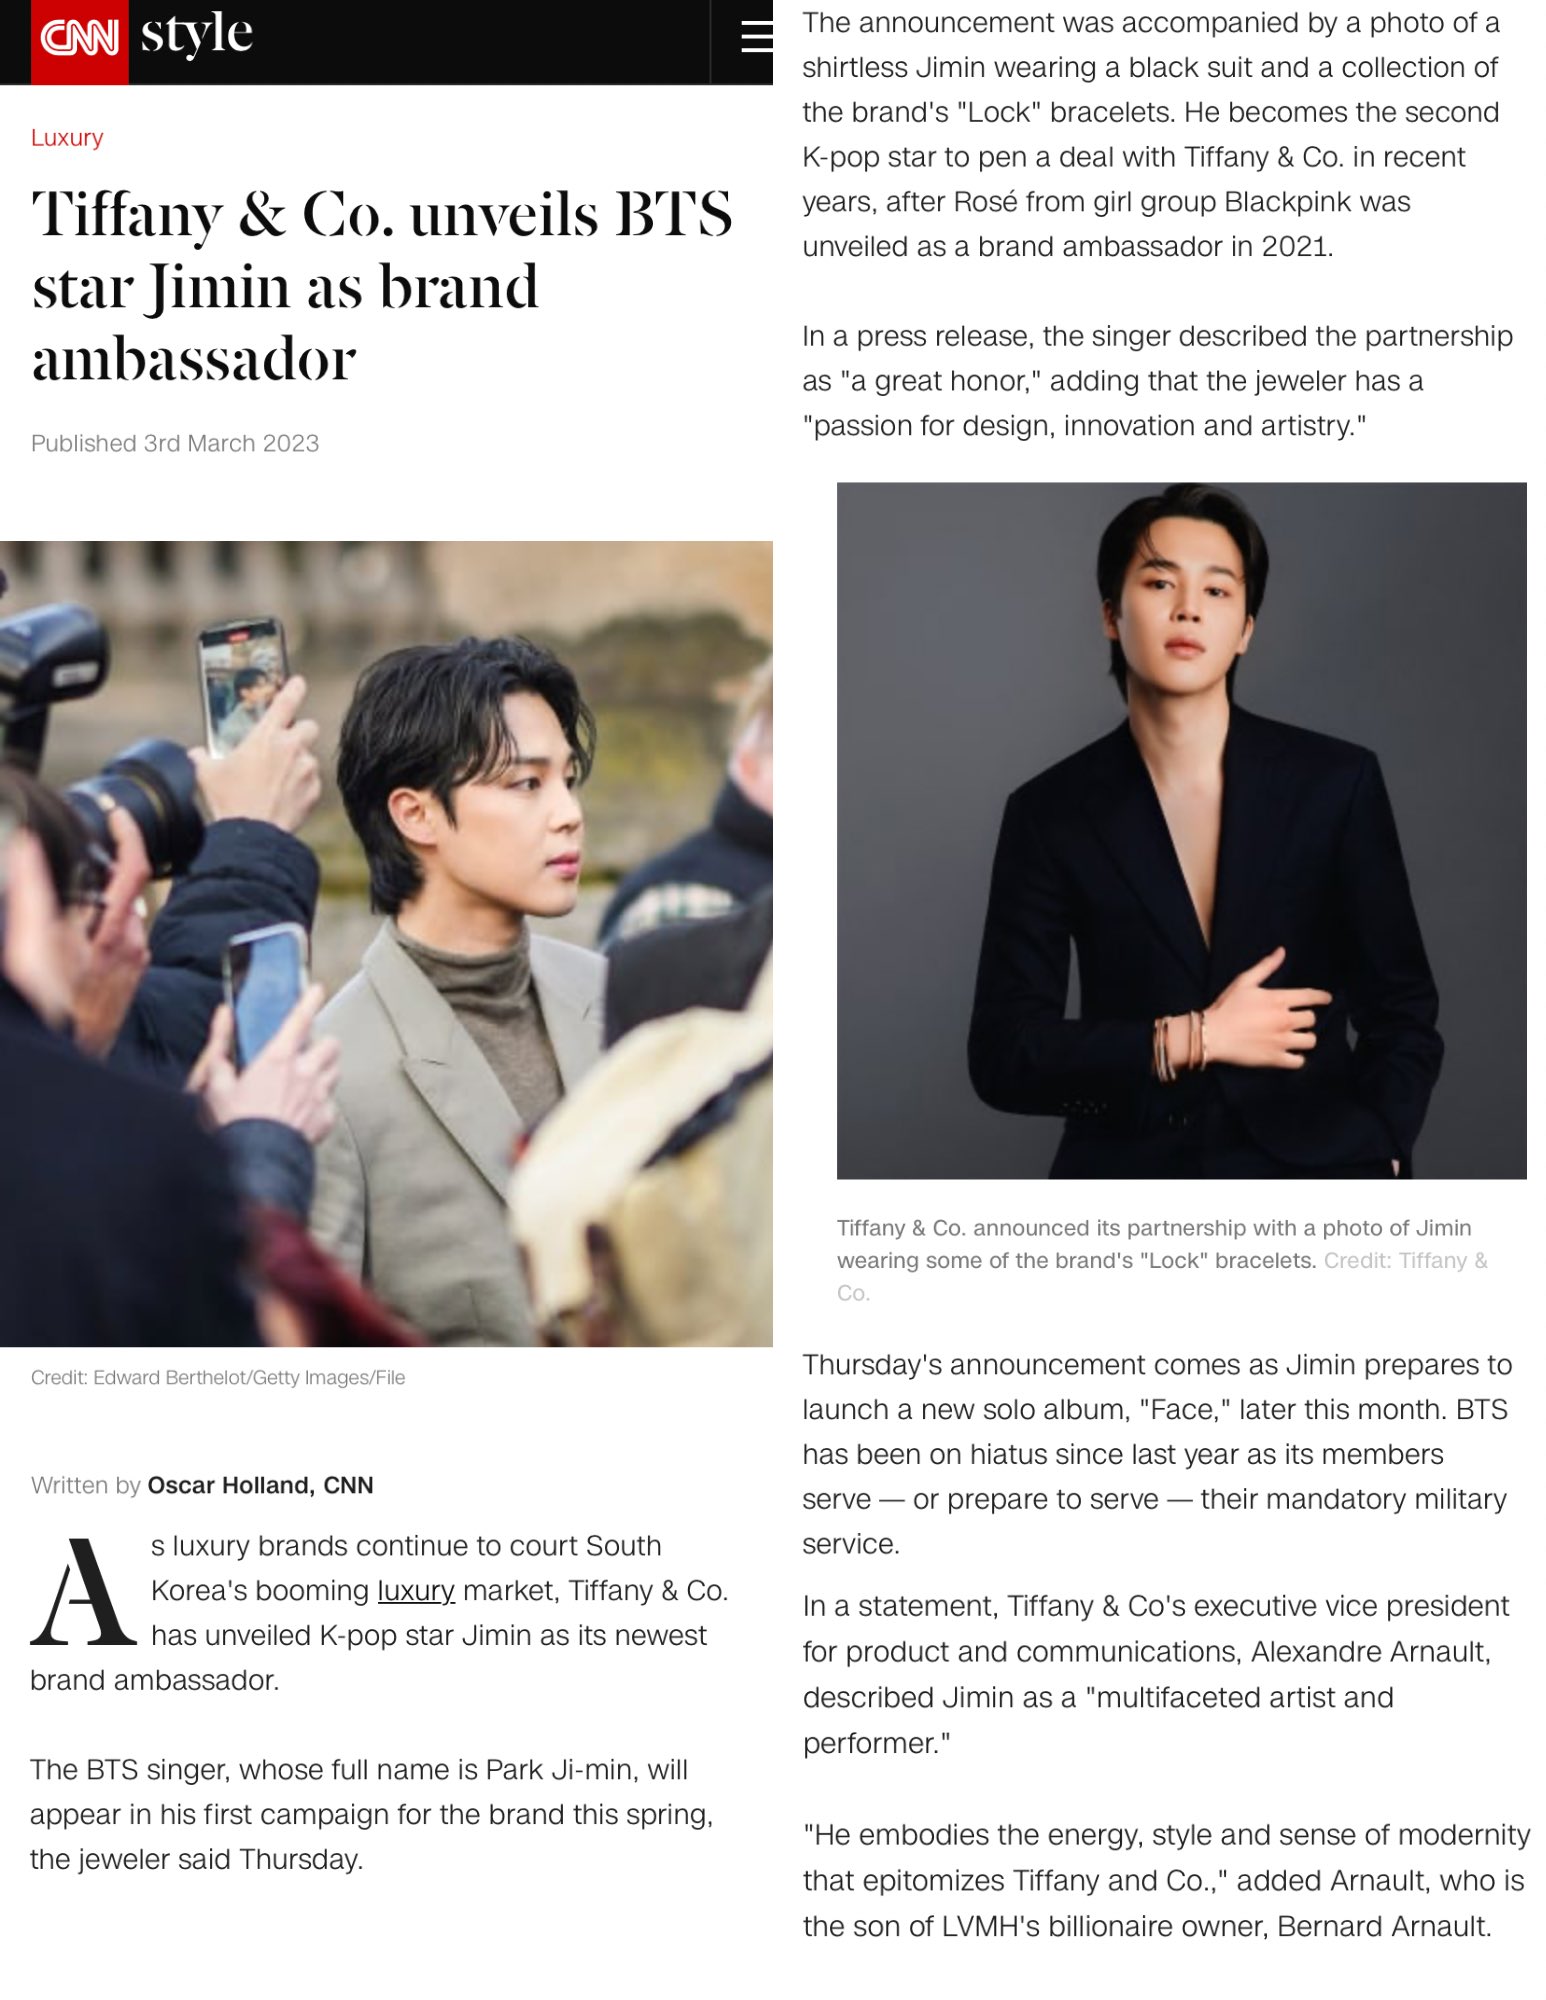 Tiffany & Co. unveils BTS star Jimin as brand ambassador